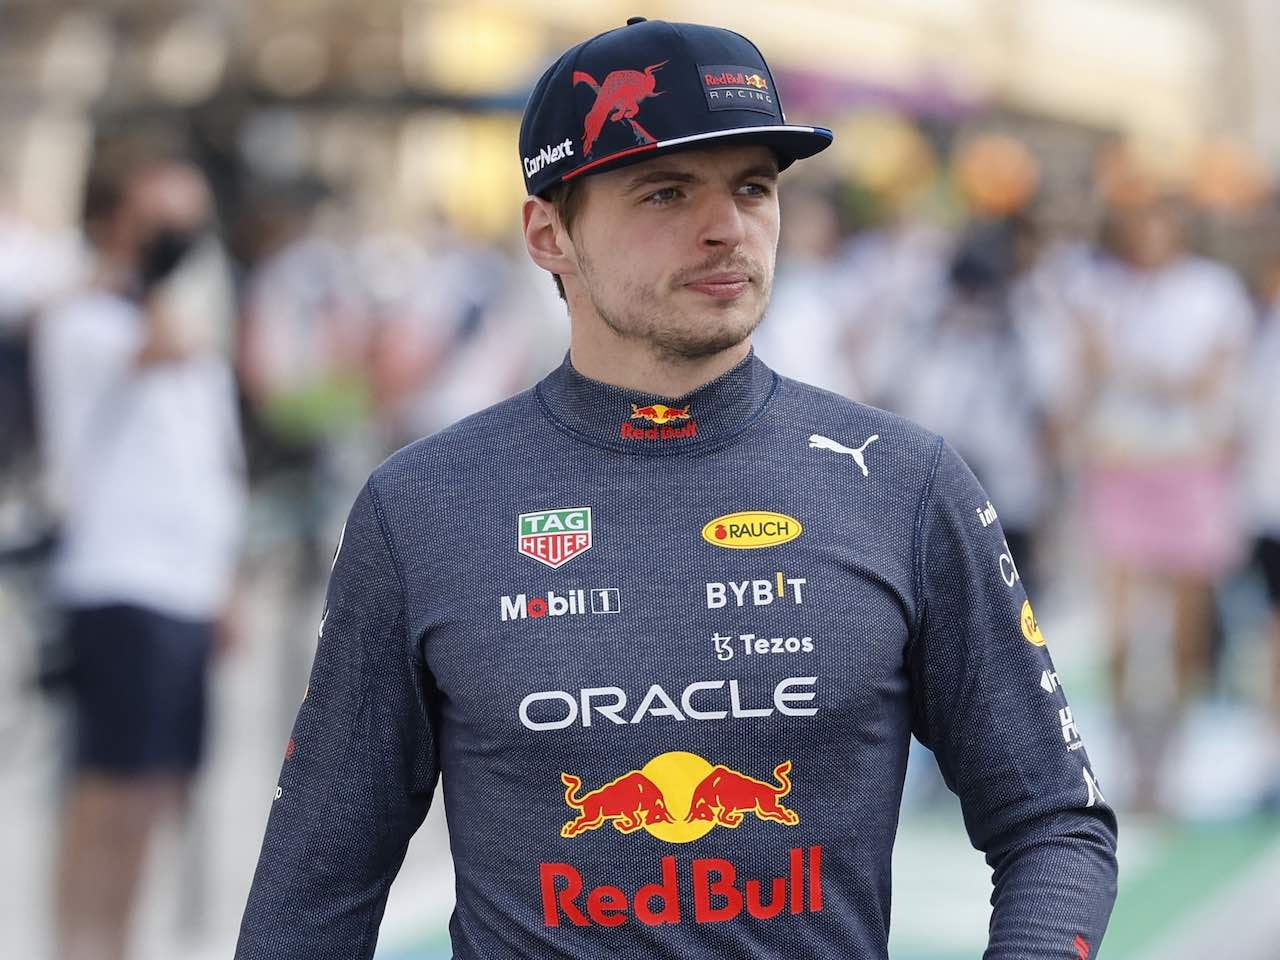 Red Bull, Klien confirm team's Bahrain fuel issue